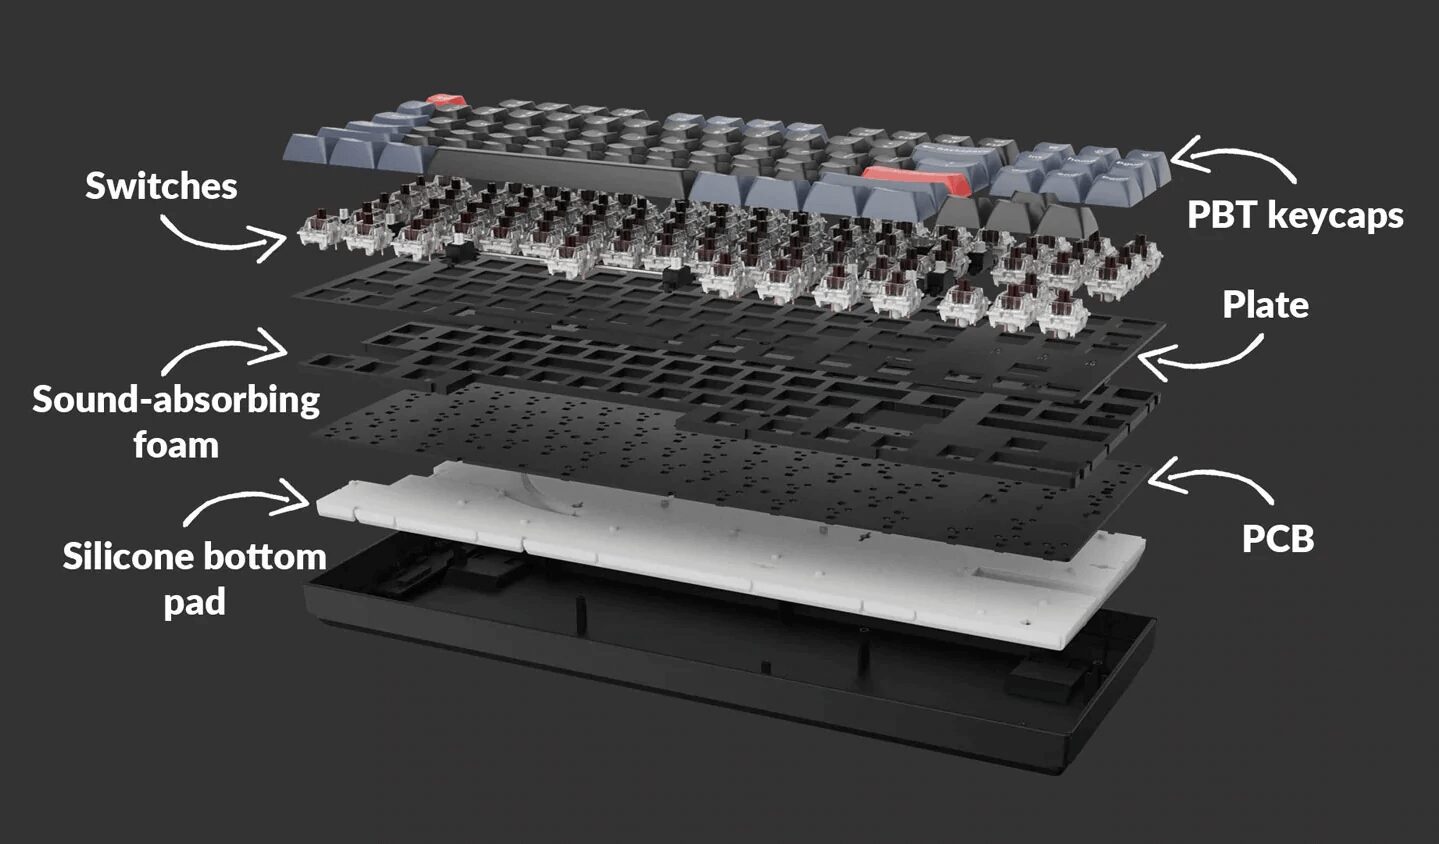 Keychron K8 Pro QMK/VIA Wireless Mechanical Keyboard Fully Assembled Hot-Swappable W/ Gateron G Pro Switch